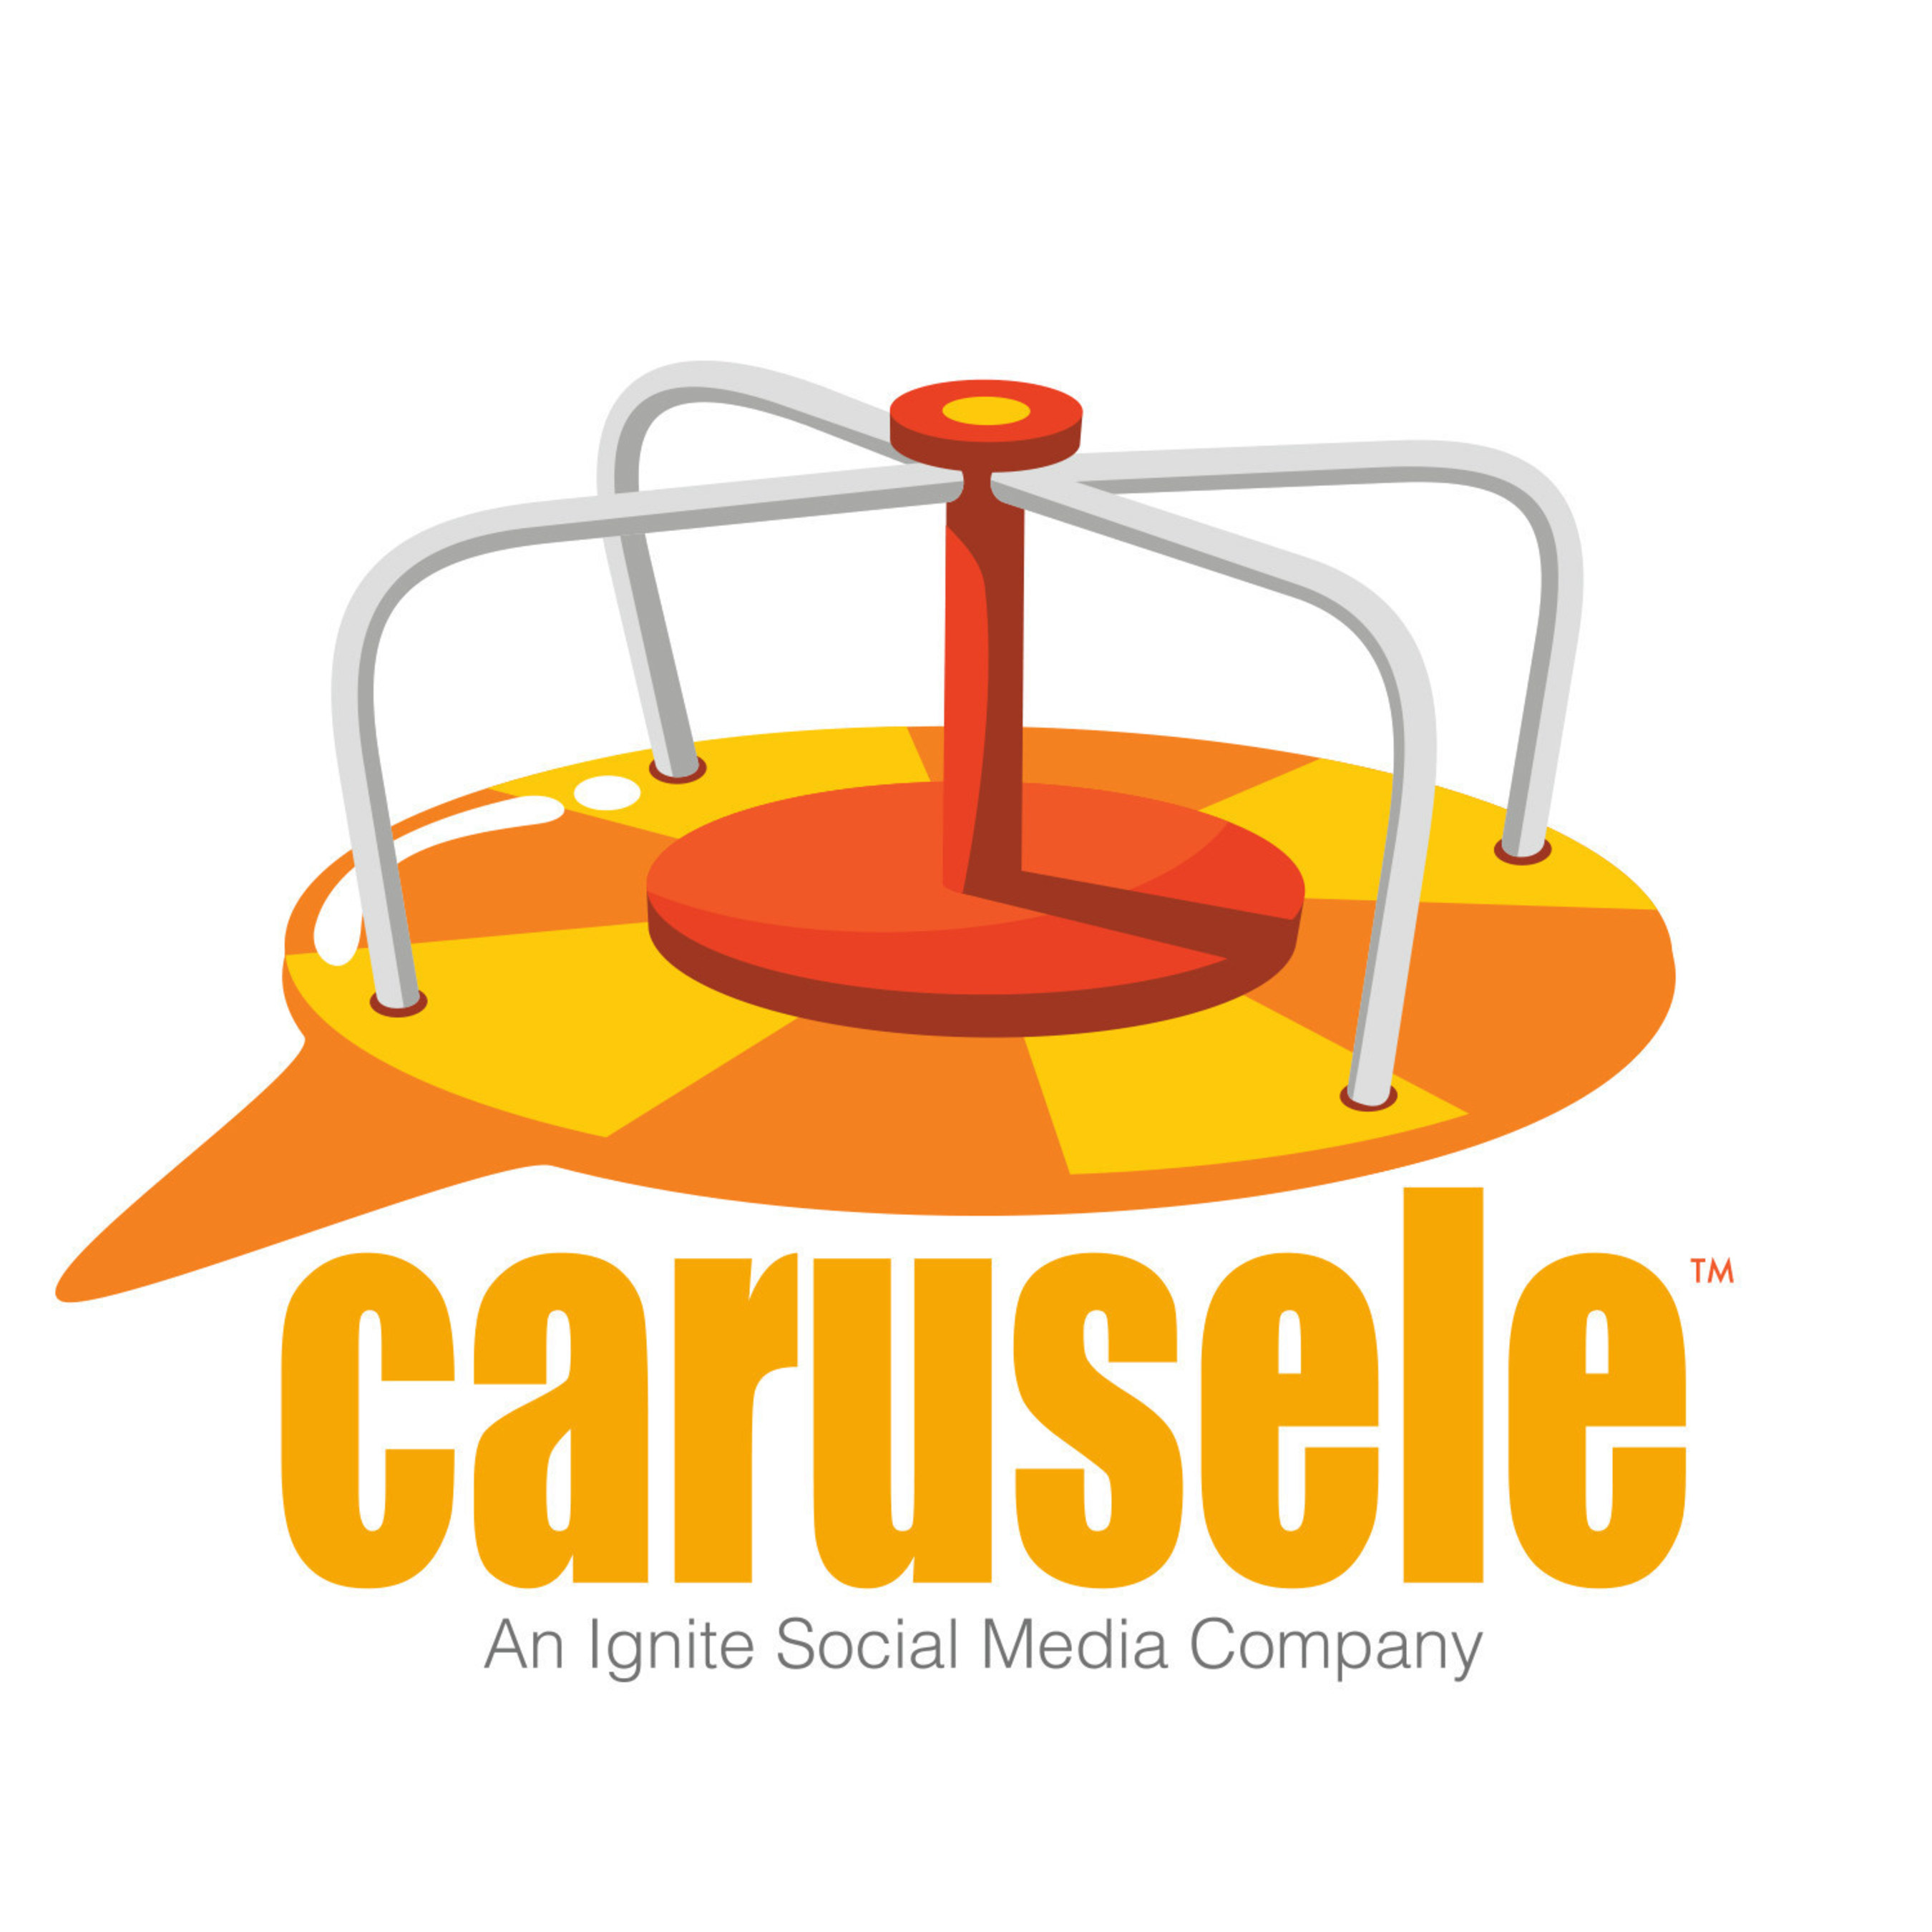 Ignite Social Media(R) launches Carusele(TM) content marketing platform Friday 3/13 at SXSW in Austin, Texas